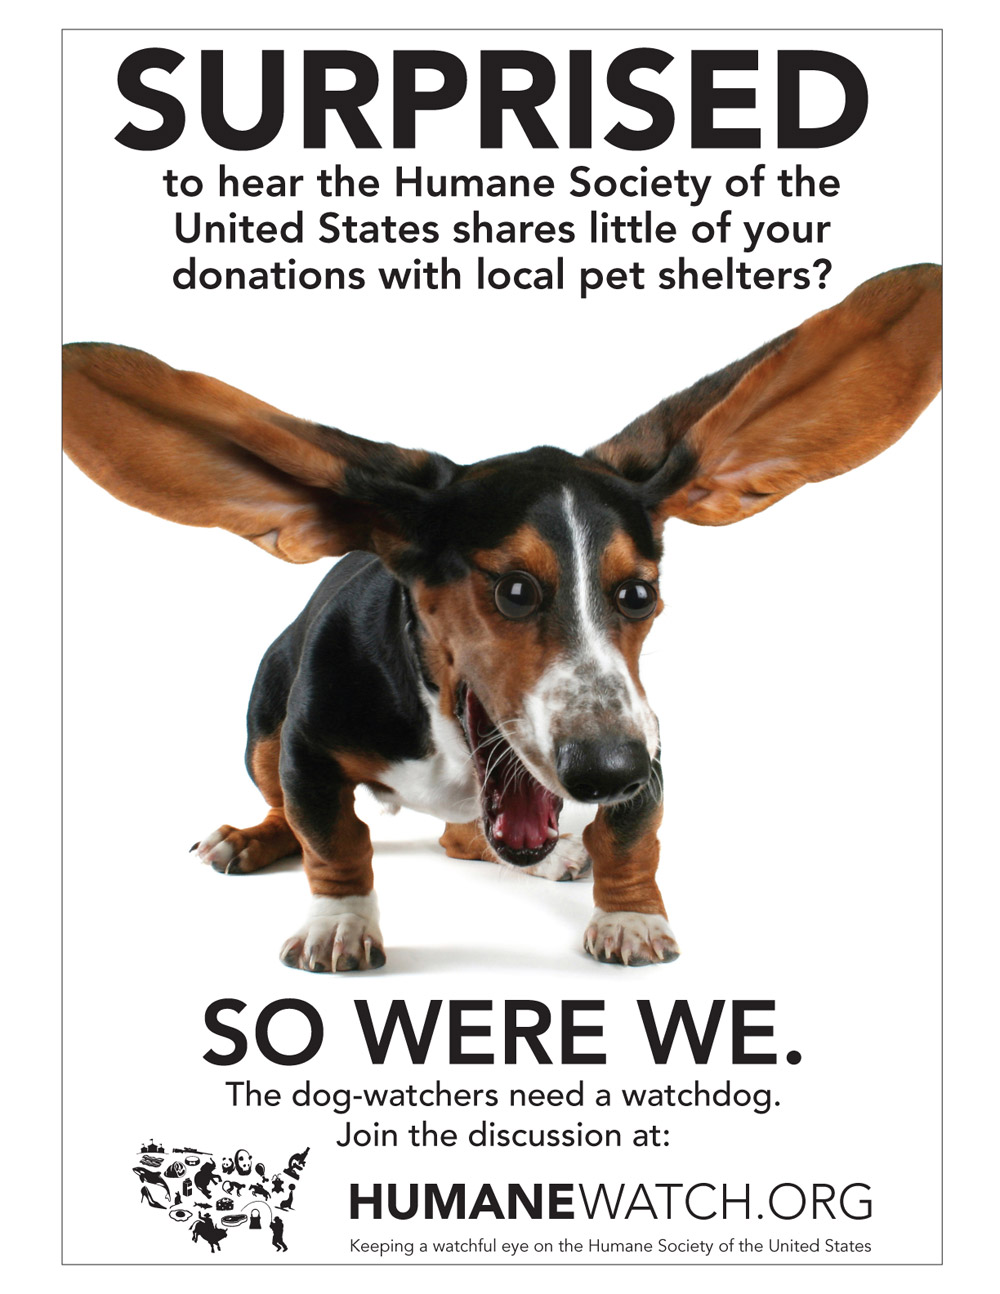 Washington, DC Bus Shelter ad: “SURPRISED?” - HumaneWatch